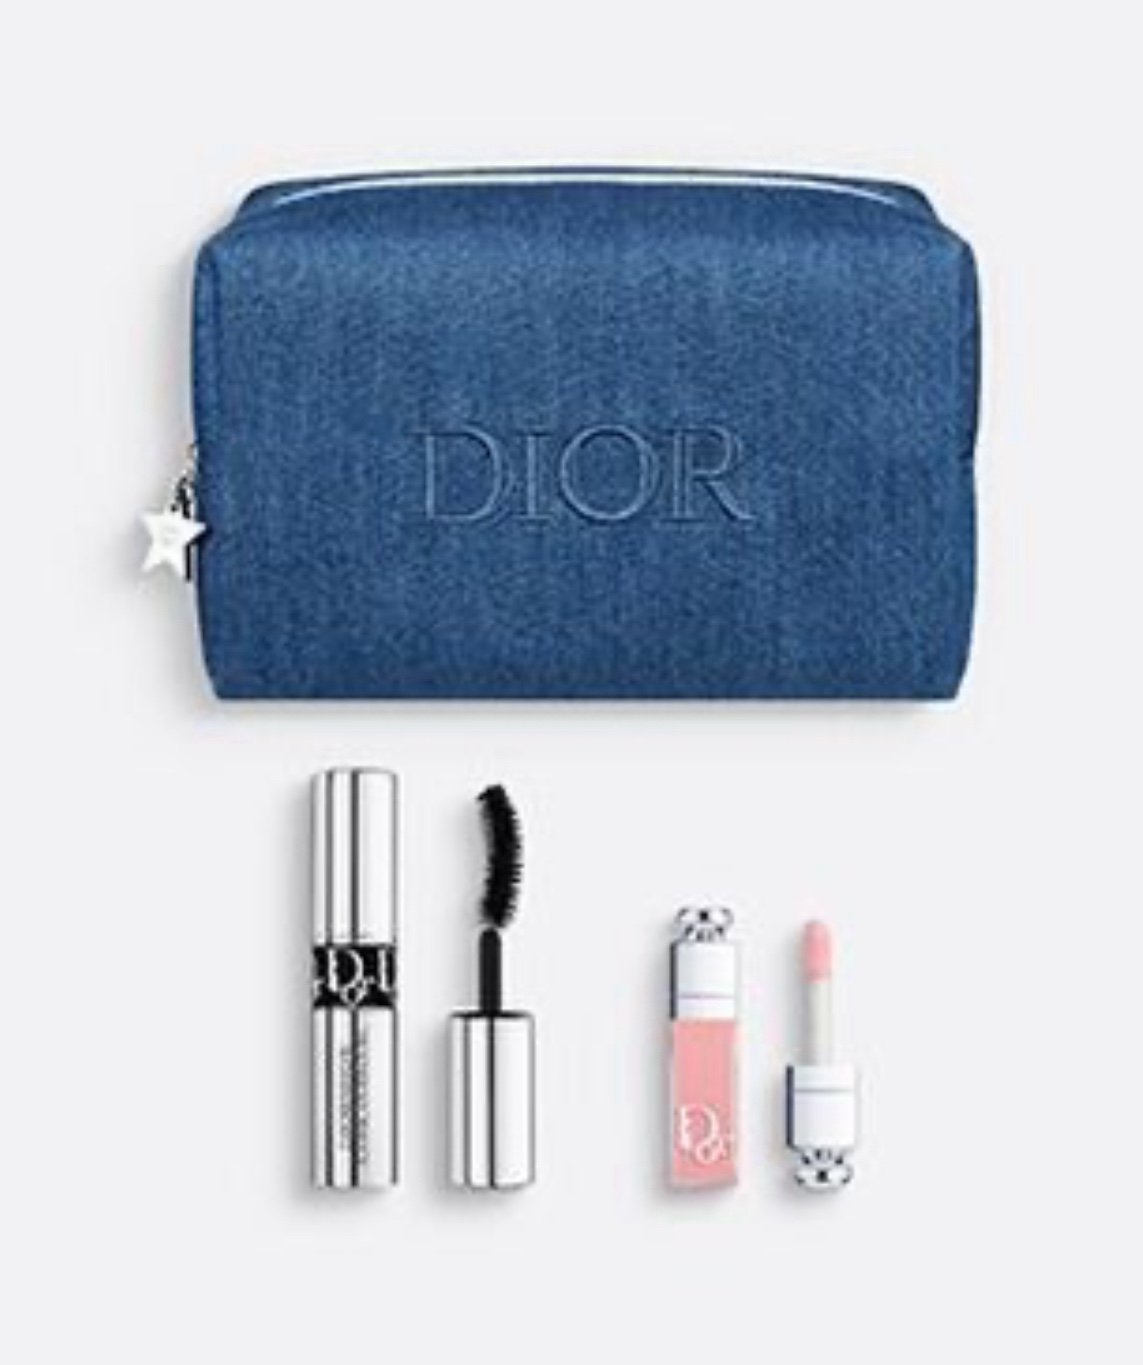 Dior denim makeup pouch, mini lip maximizer and mascara